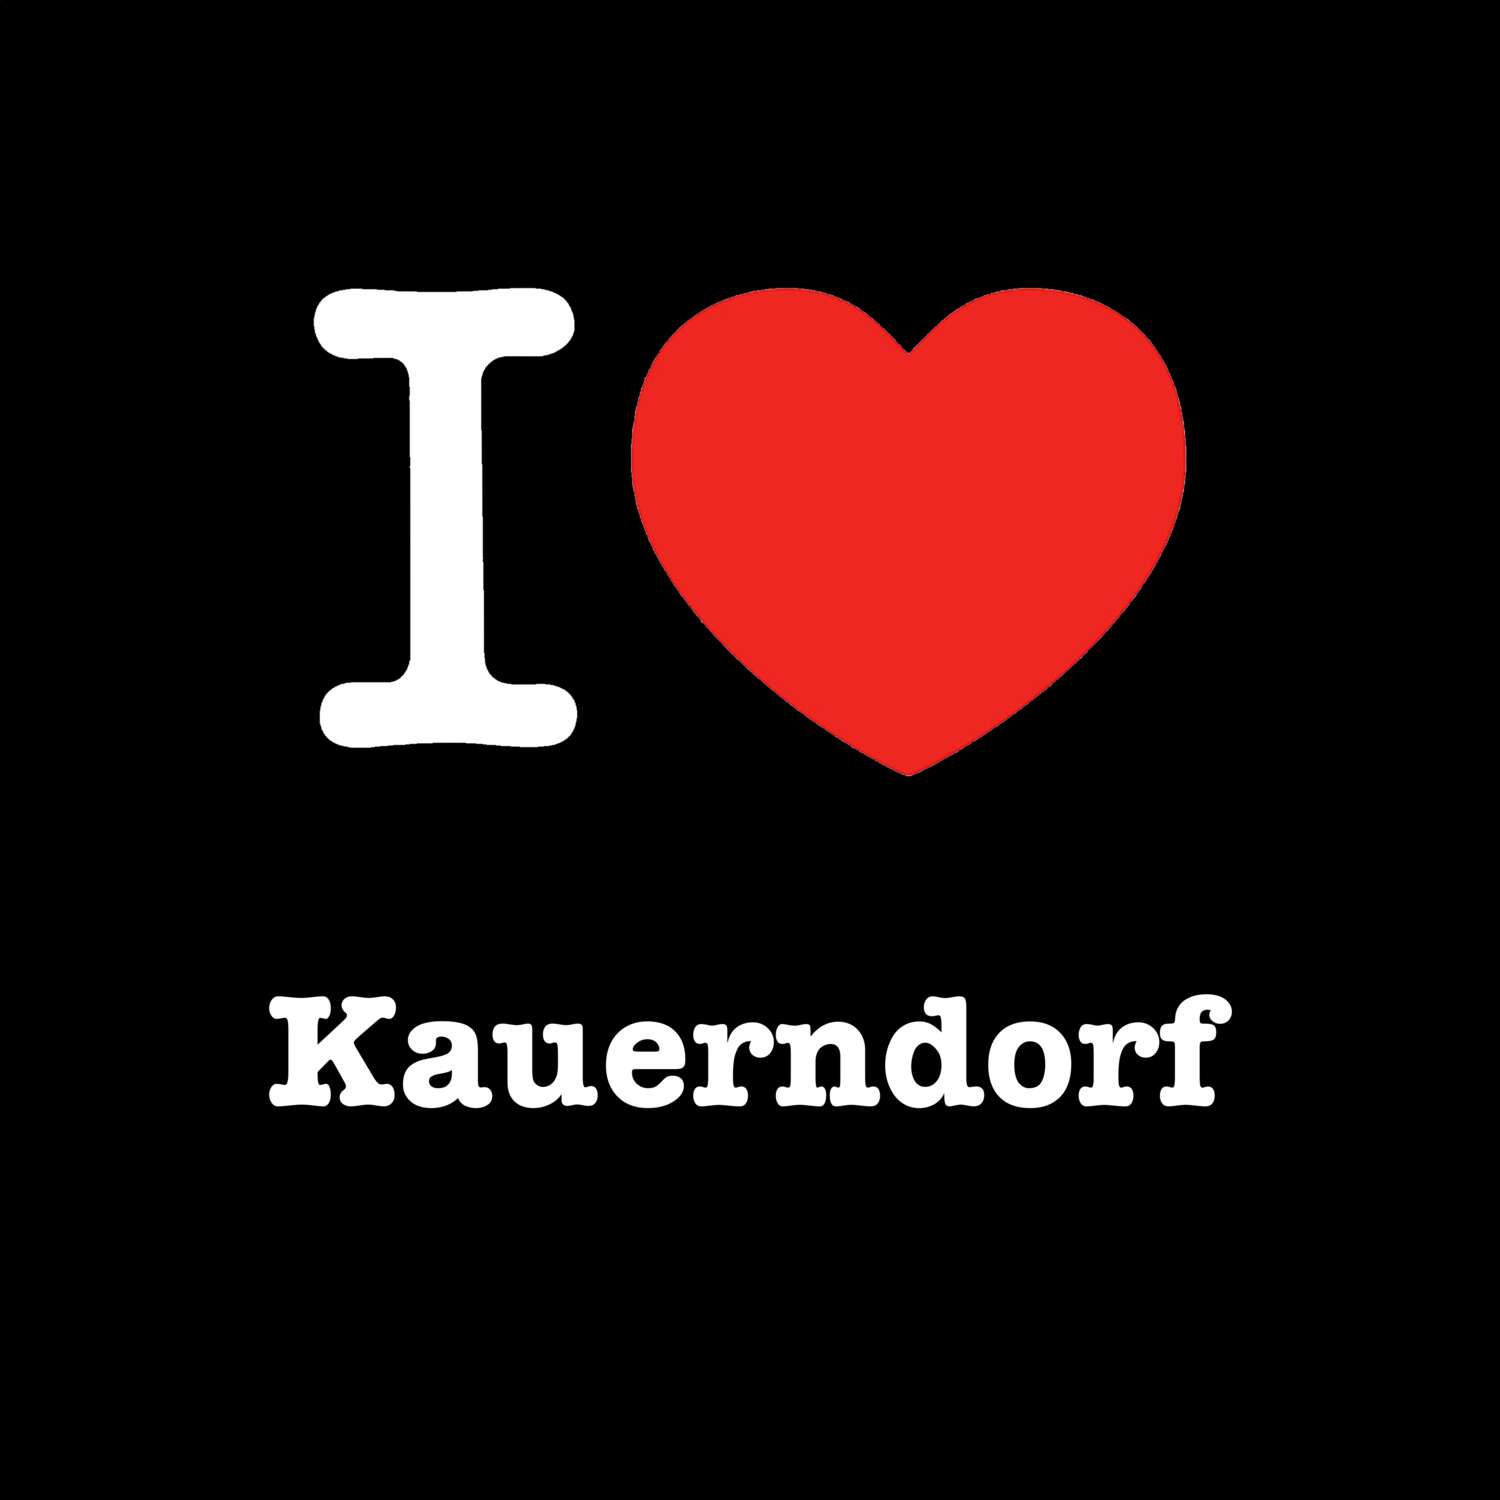 Kauerndorf T-Shirt »I love«